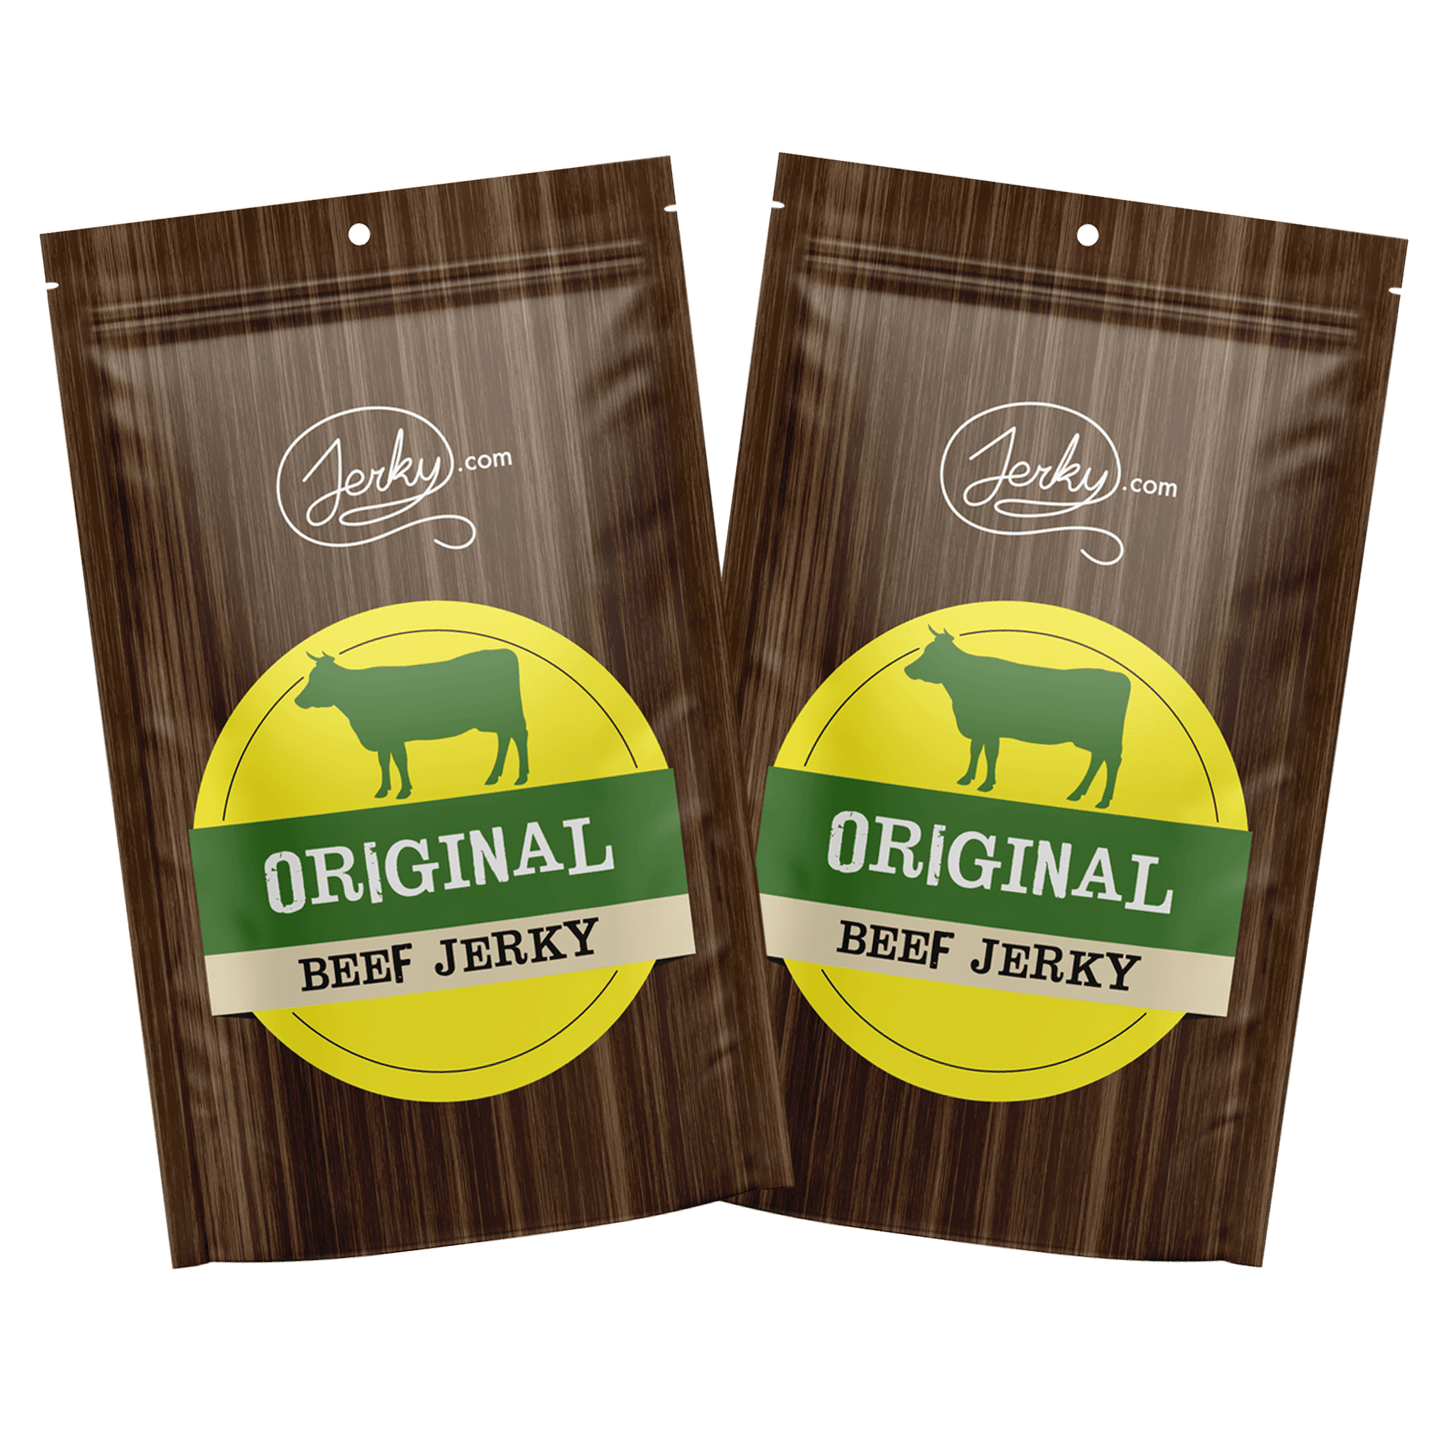 All-Natural Beef Jerky - Original - 1 Pound Bag by Jerky.com